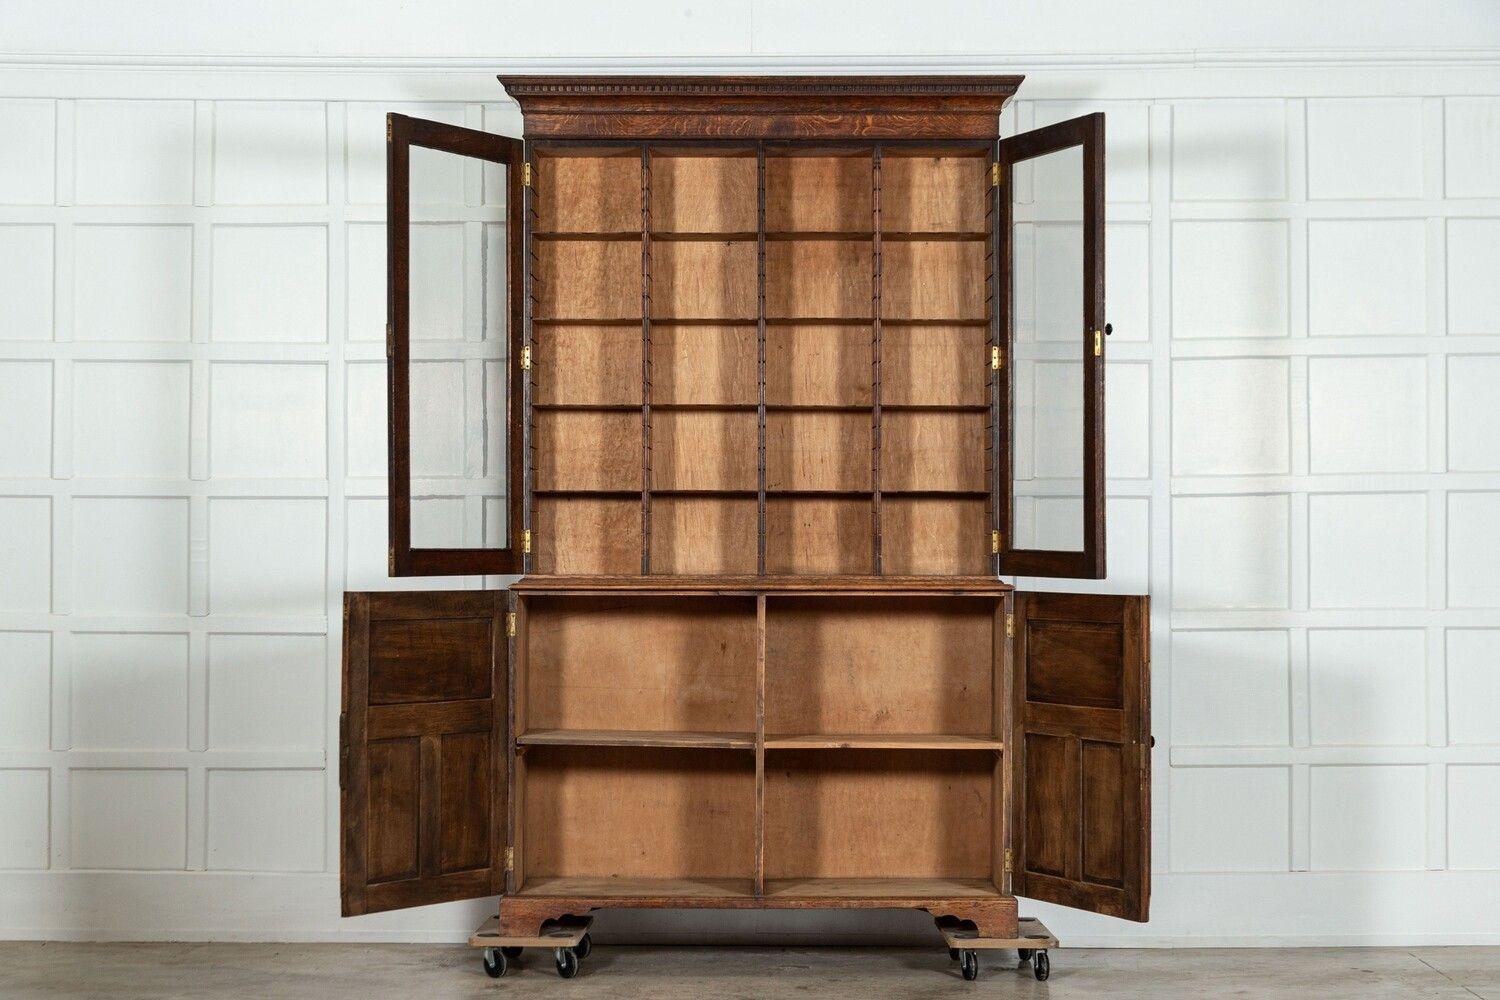 circa 1900
Large English Oak Glazed Bookcase / Vitrine
sku 1671
Base W138 x D48 x H96 cm
Top W146 x D33 x H140 cm
Together W146 x D48 x H236 cm